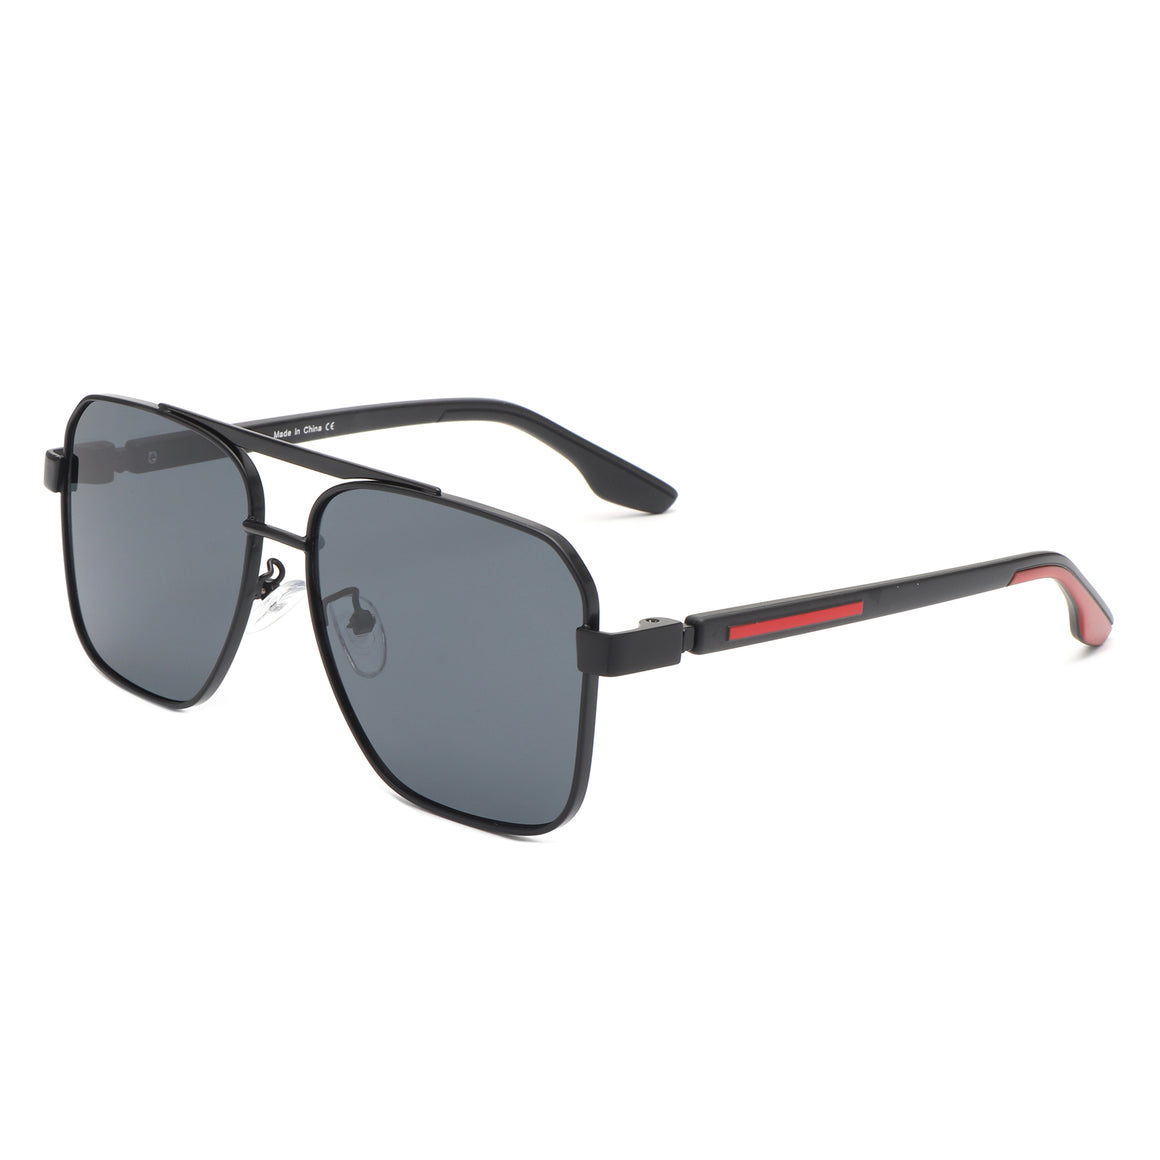 Shimmer - Square Flat Top Tinted Brow-Bar Fashion Sunglasses